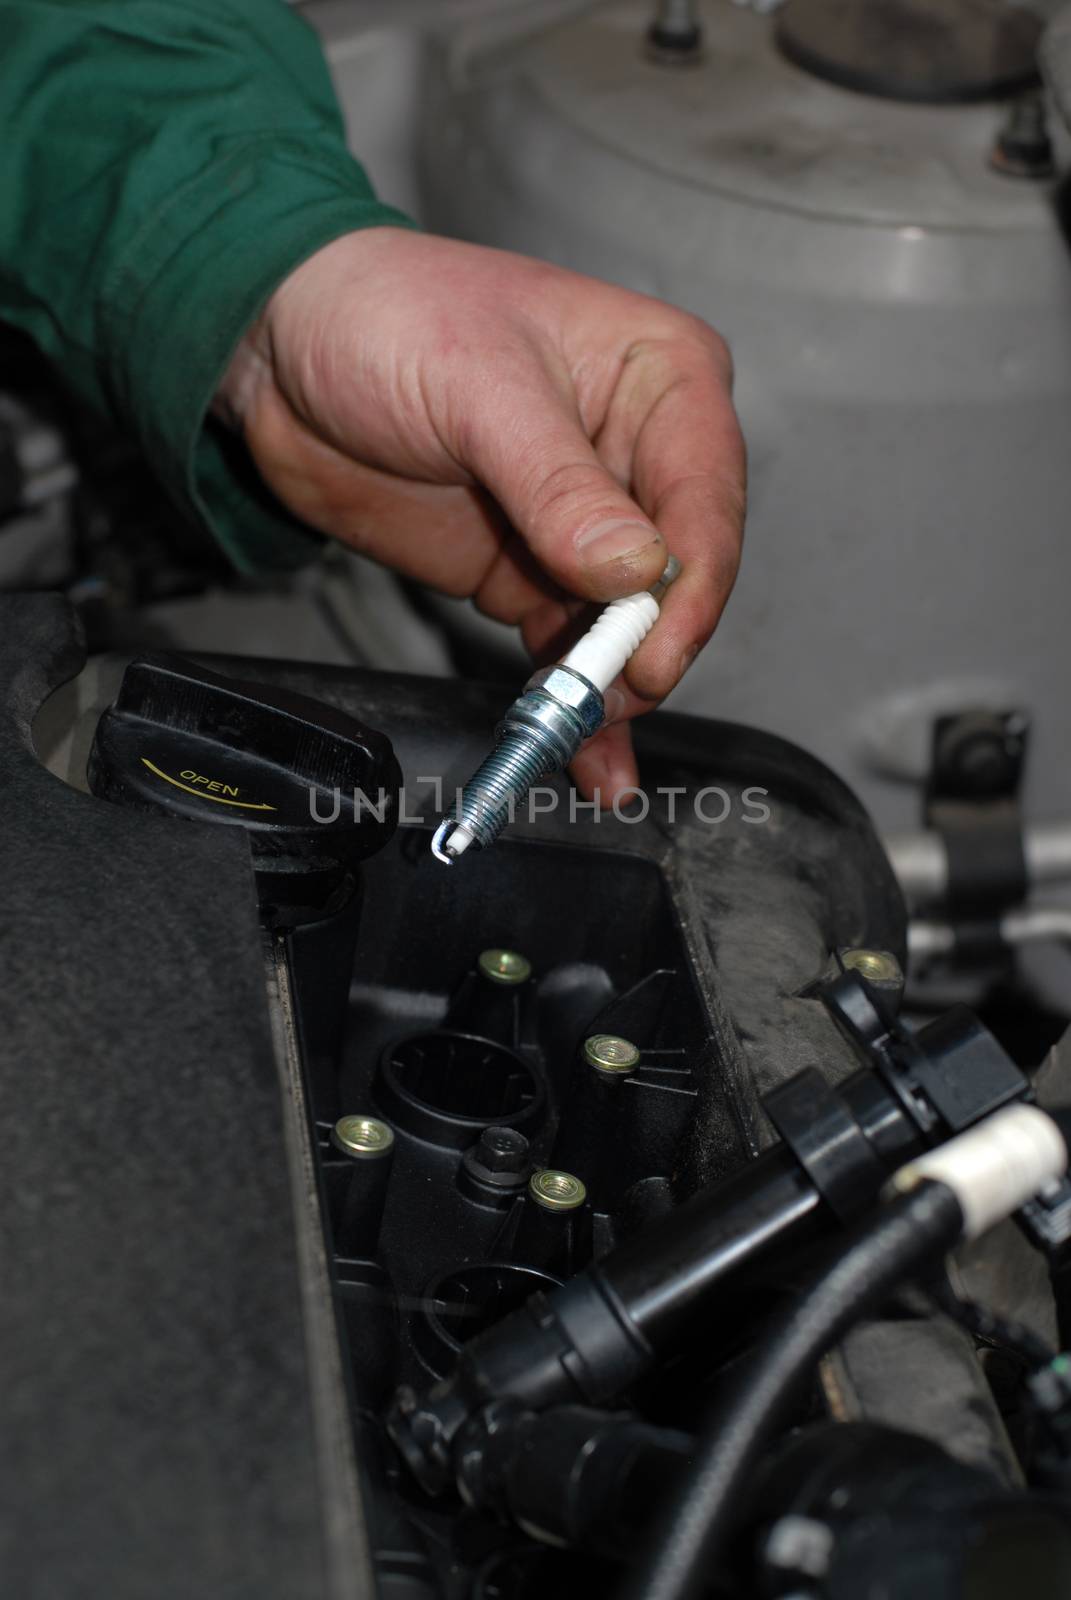 mechanic removed the old automotive spark plug